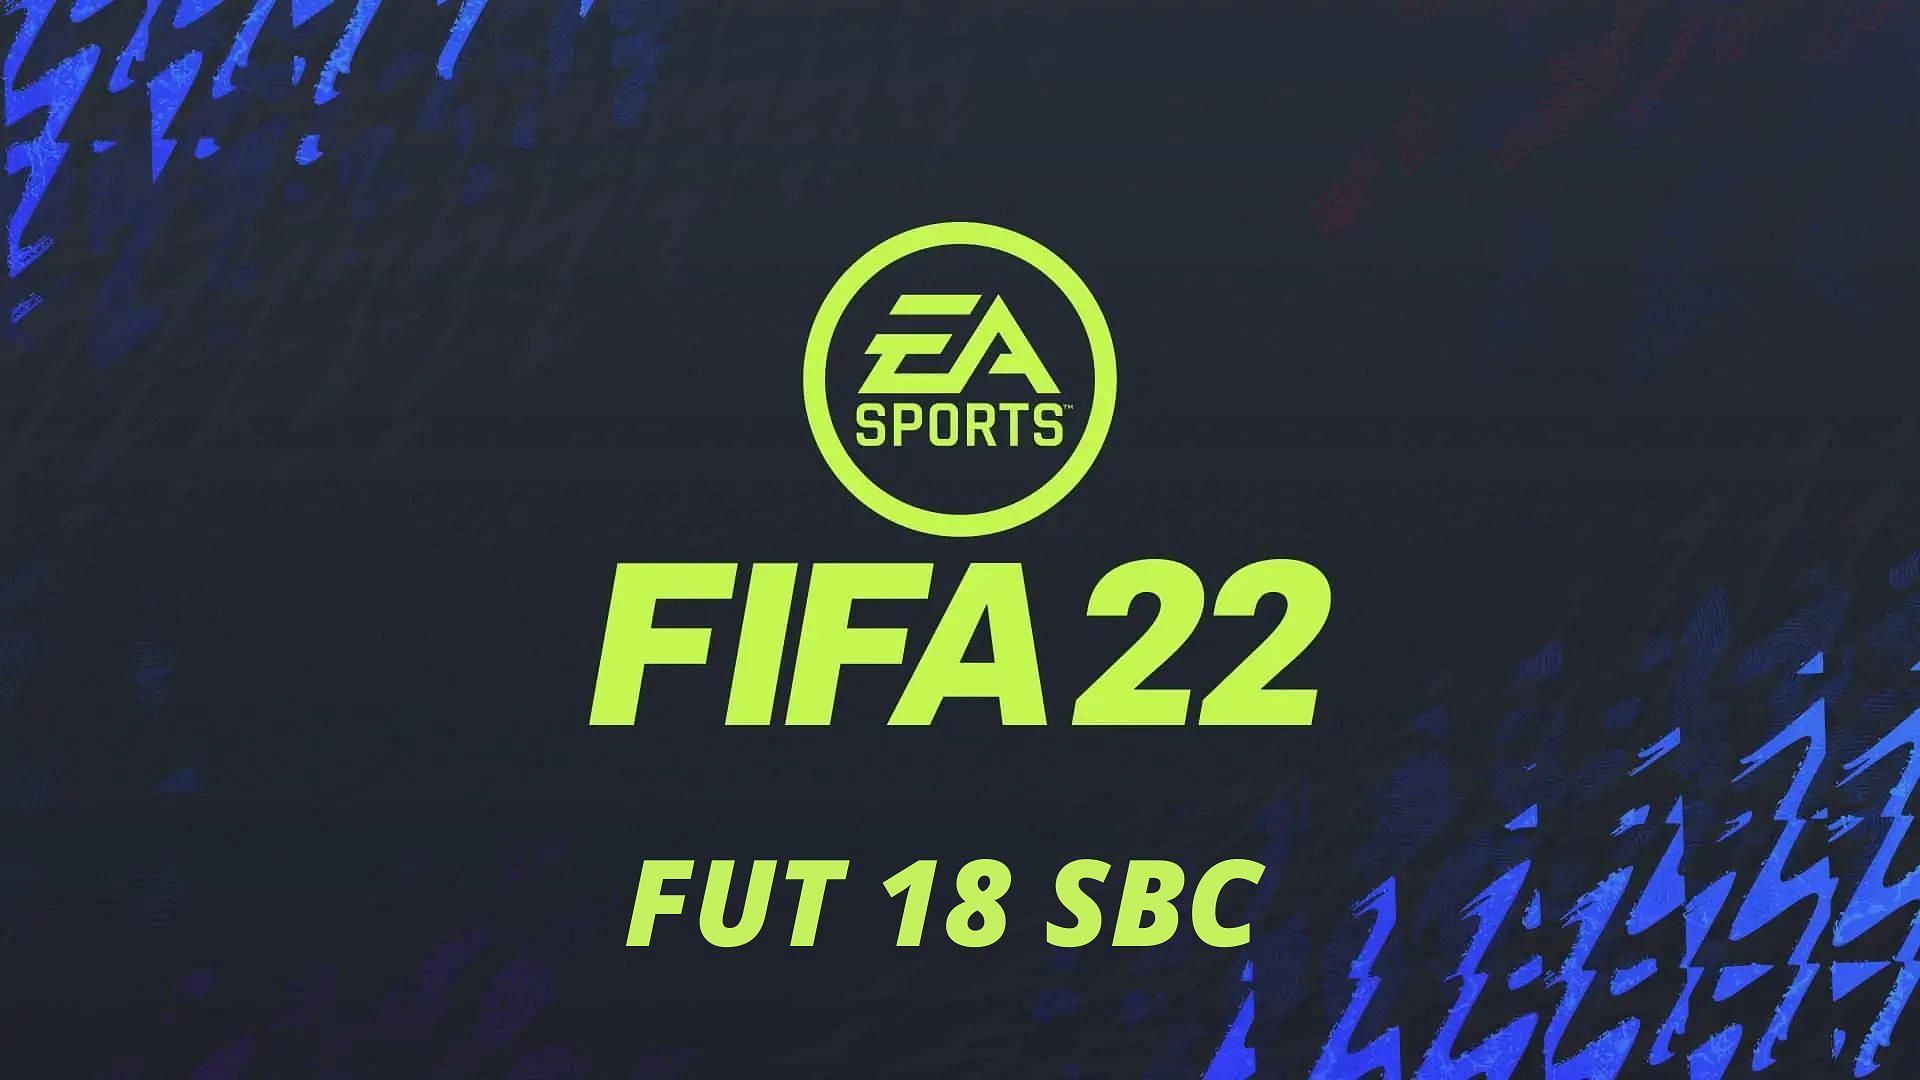 FUT 18 SBC is now live in FIFA 22 Ultimate Team (Image via Sportskeeda)